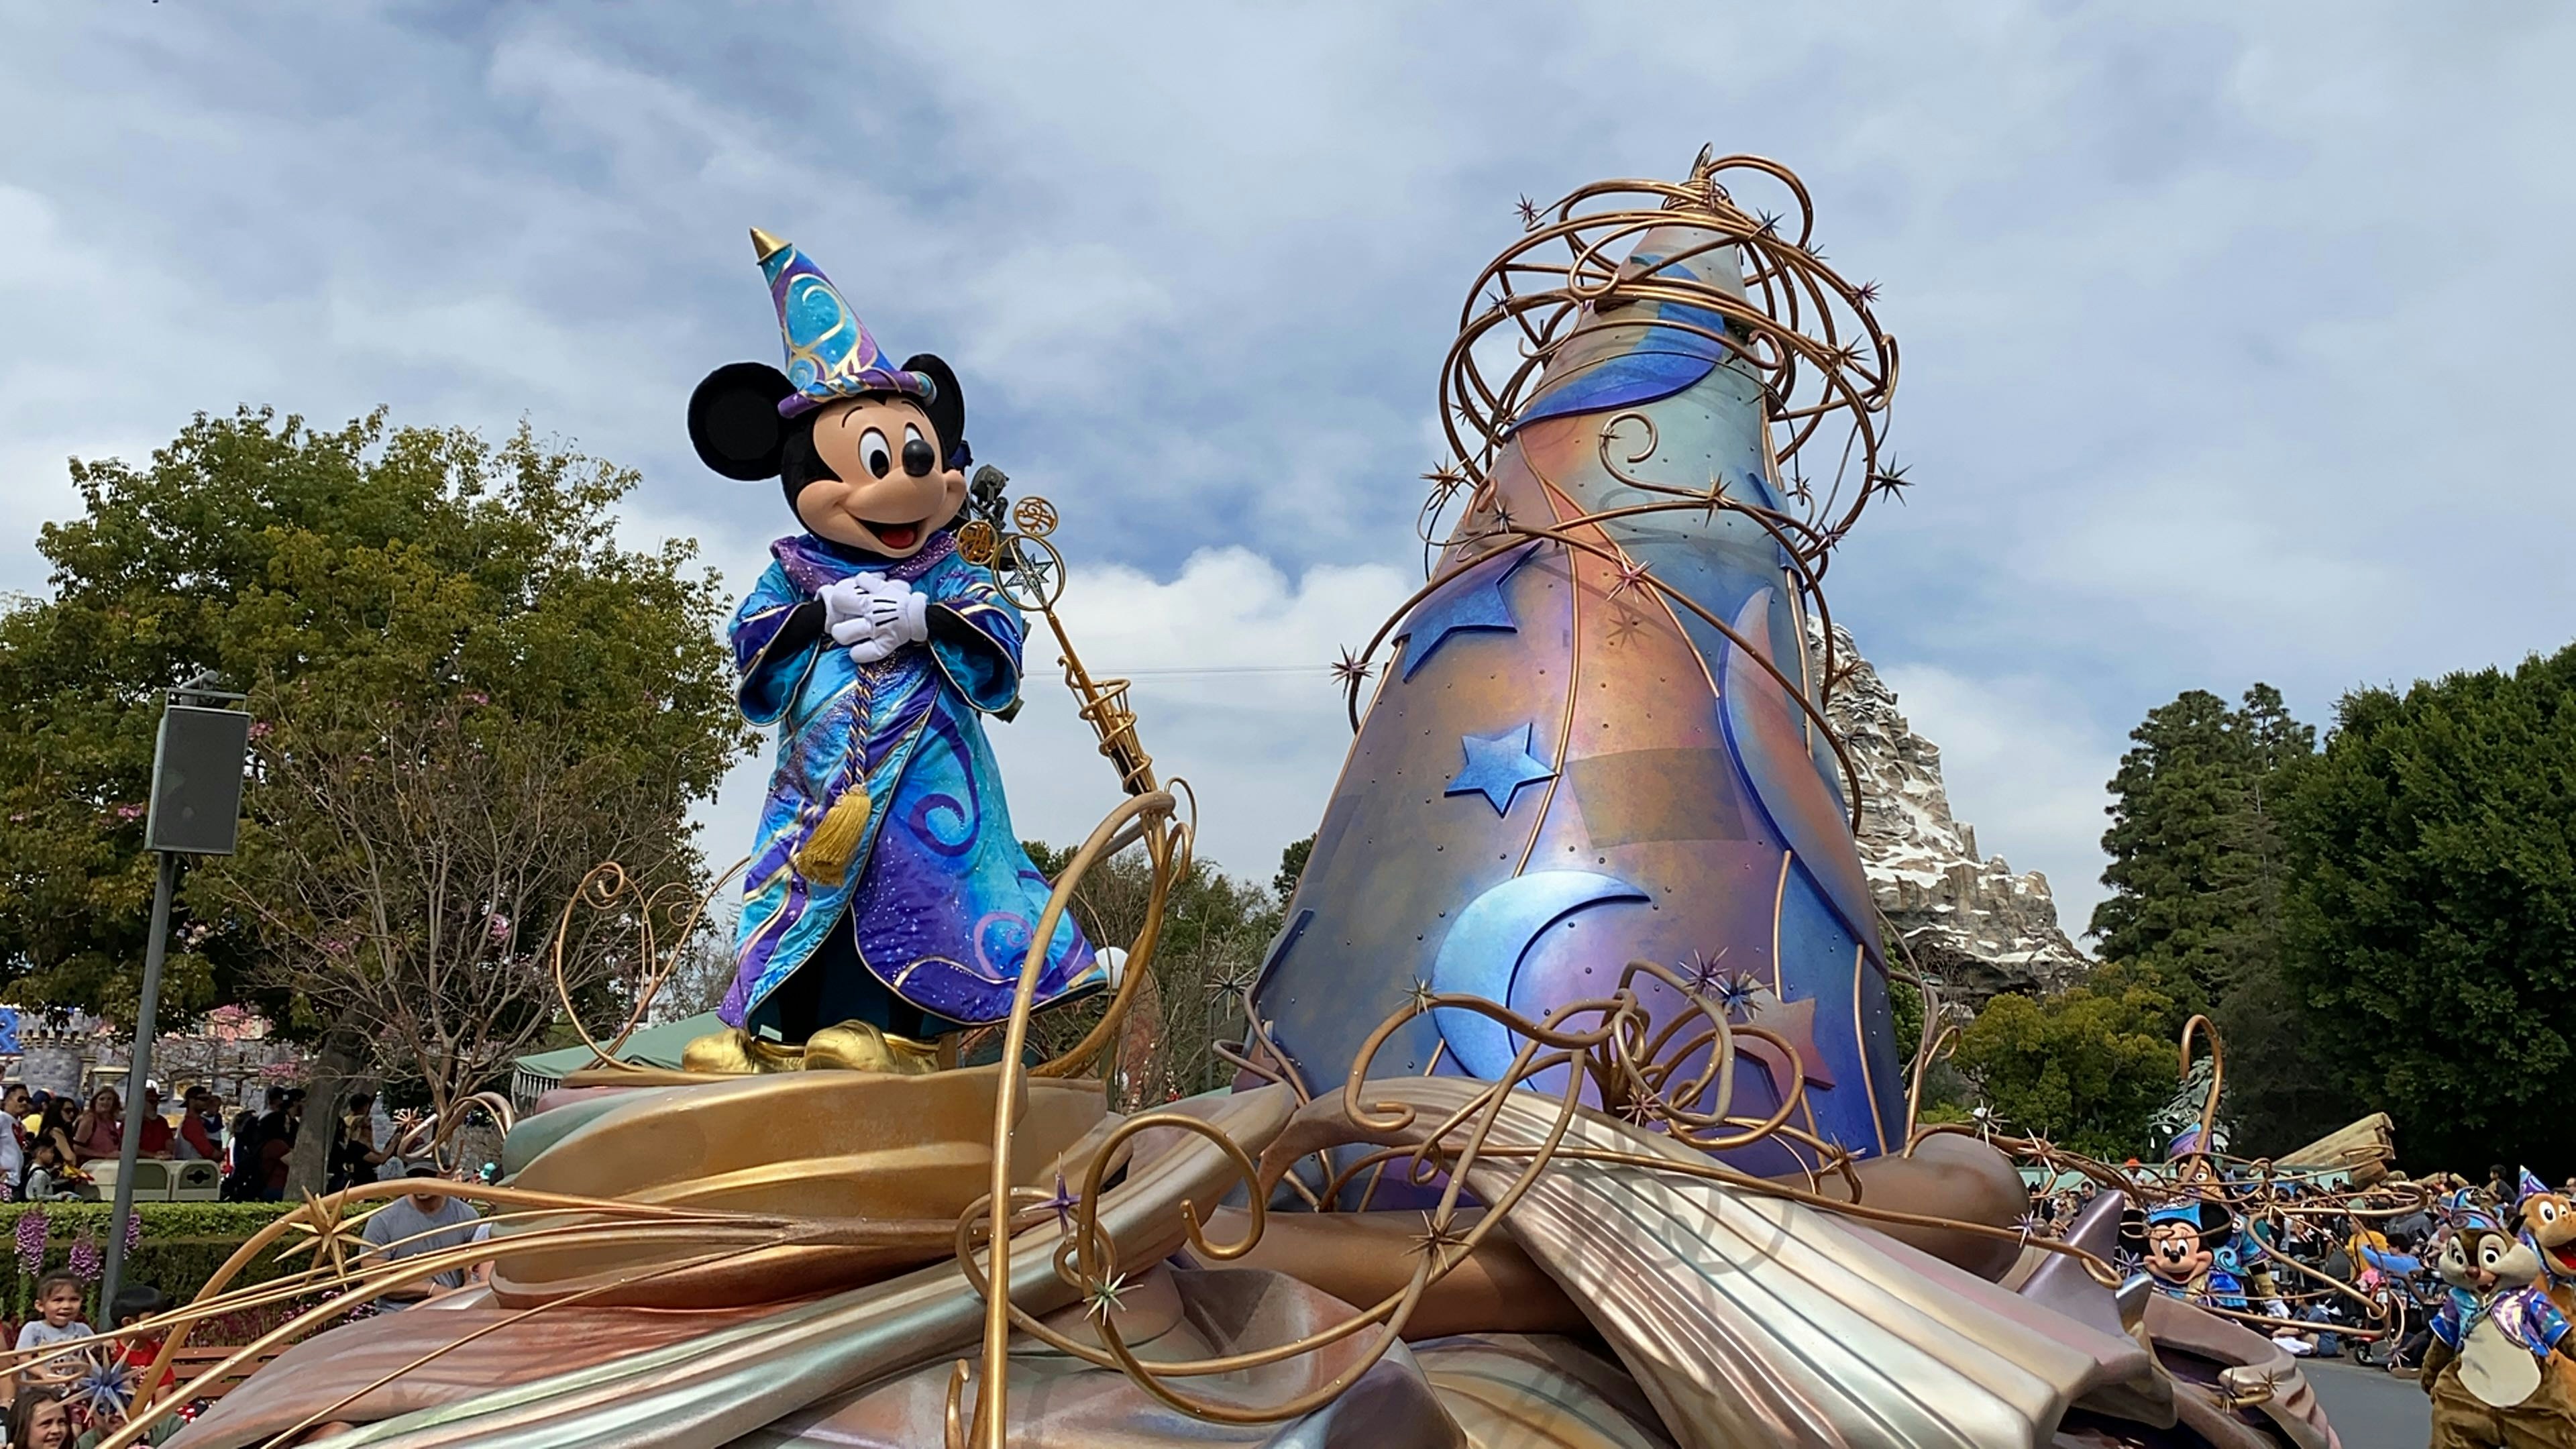 PHOTOS, VIDEO New "Magic Happens" Parade Debuts at Disneyland WDW